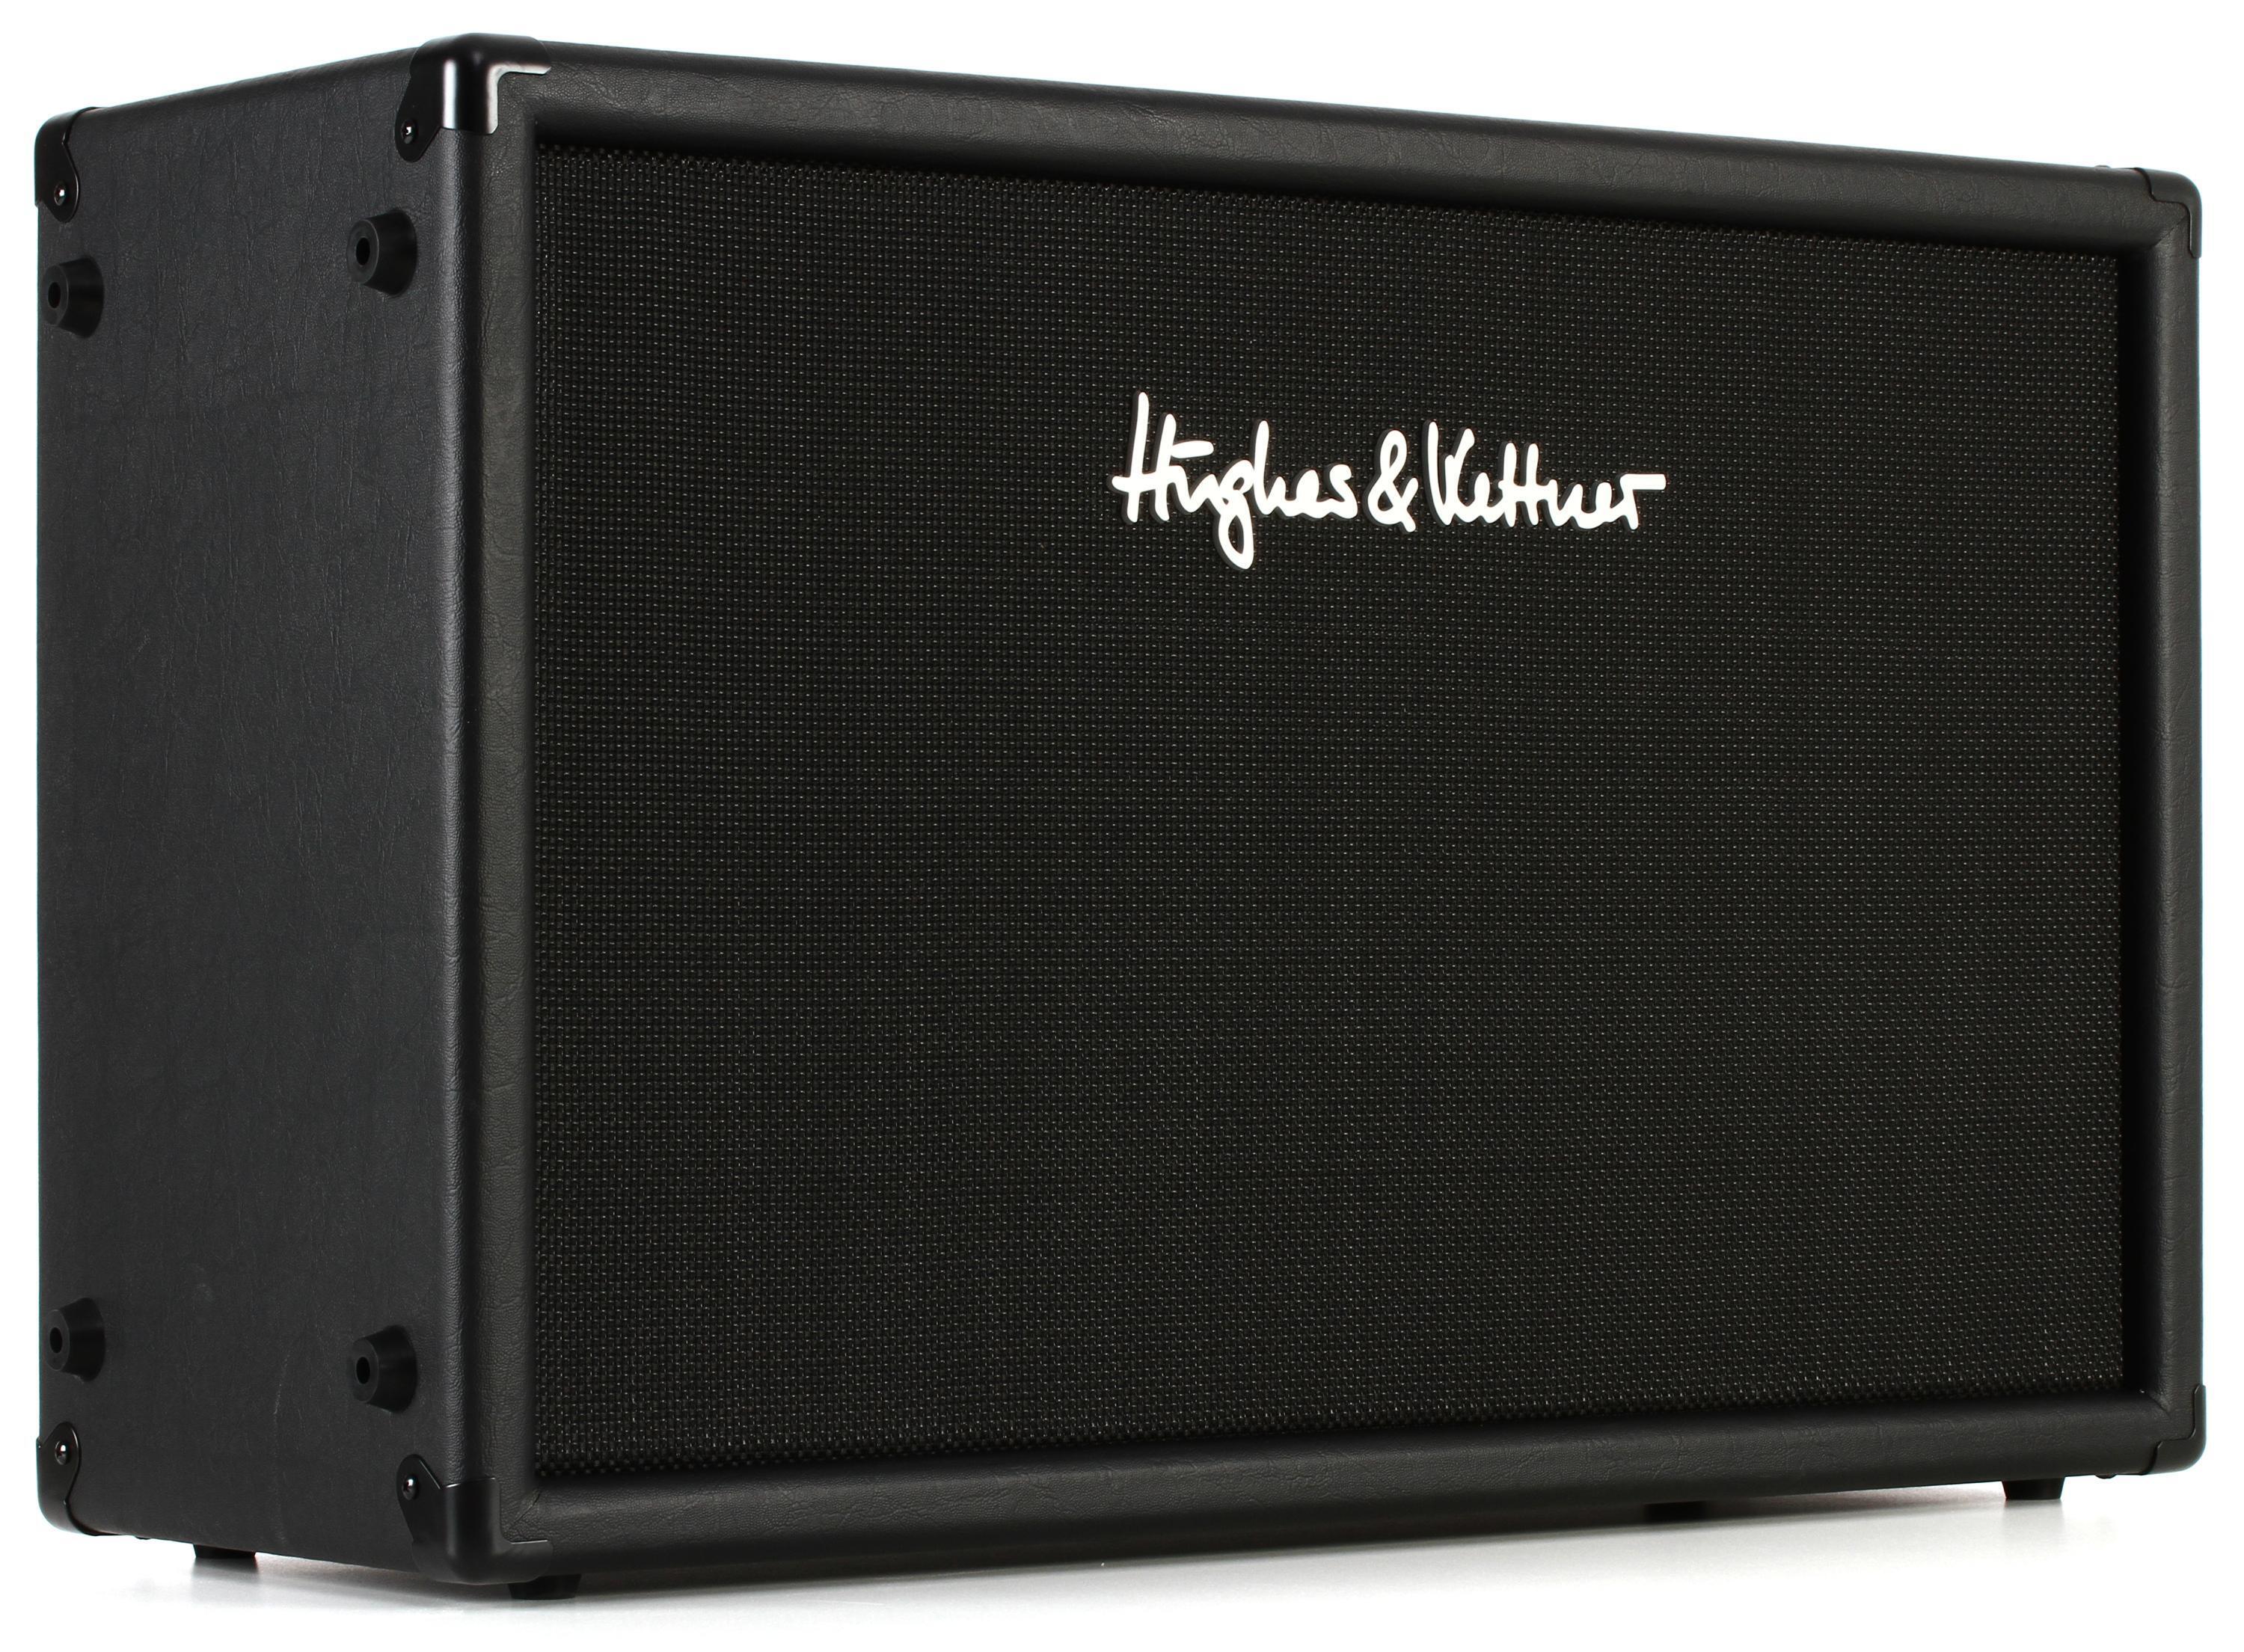 Bundled Item: Hughes & Kettner TubeMeister 212 120-watt 2x12 inch Extension Cabinet